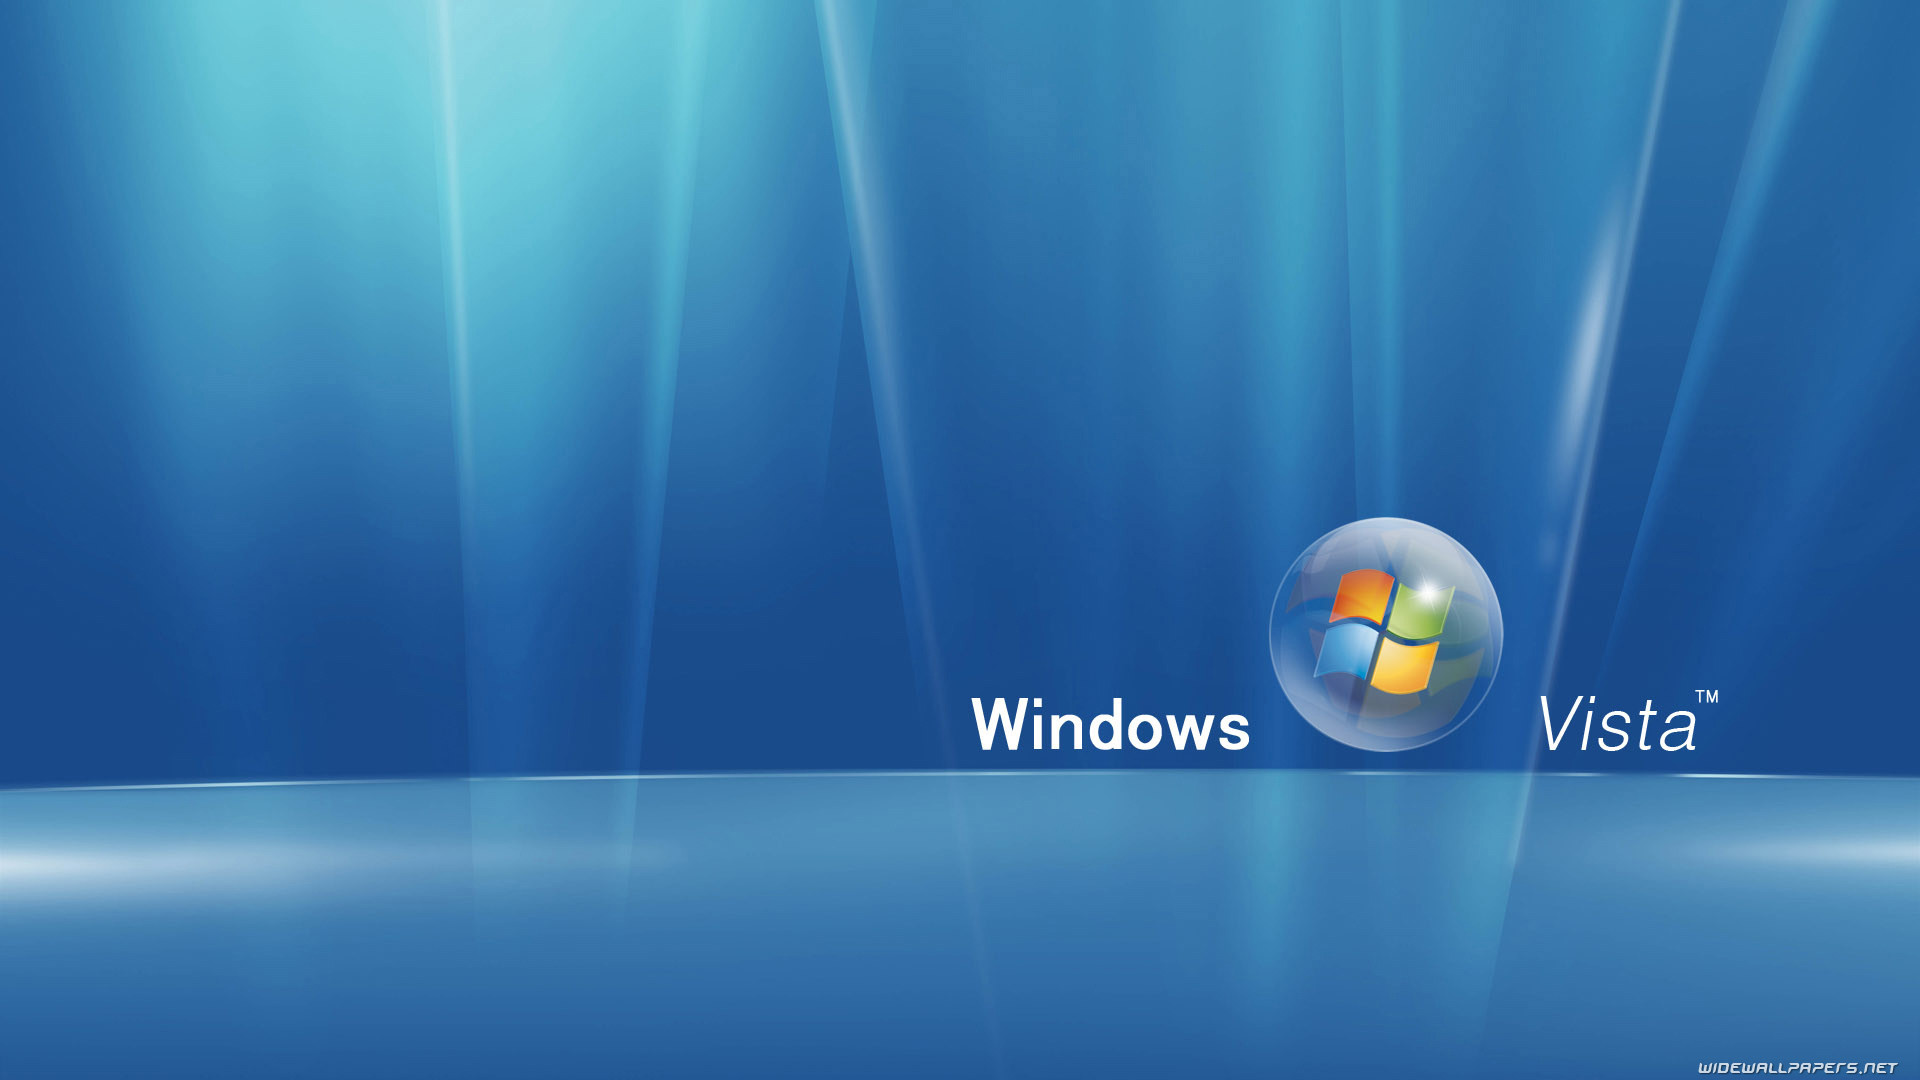 Windows Vista Desktop Backgrounds 46 Pictures